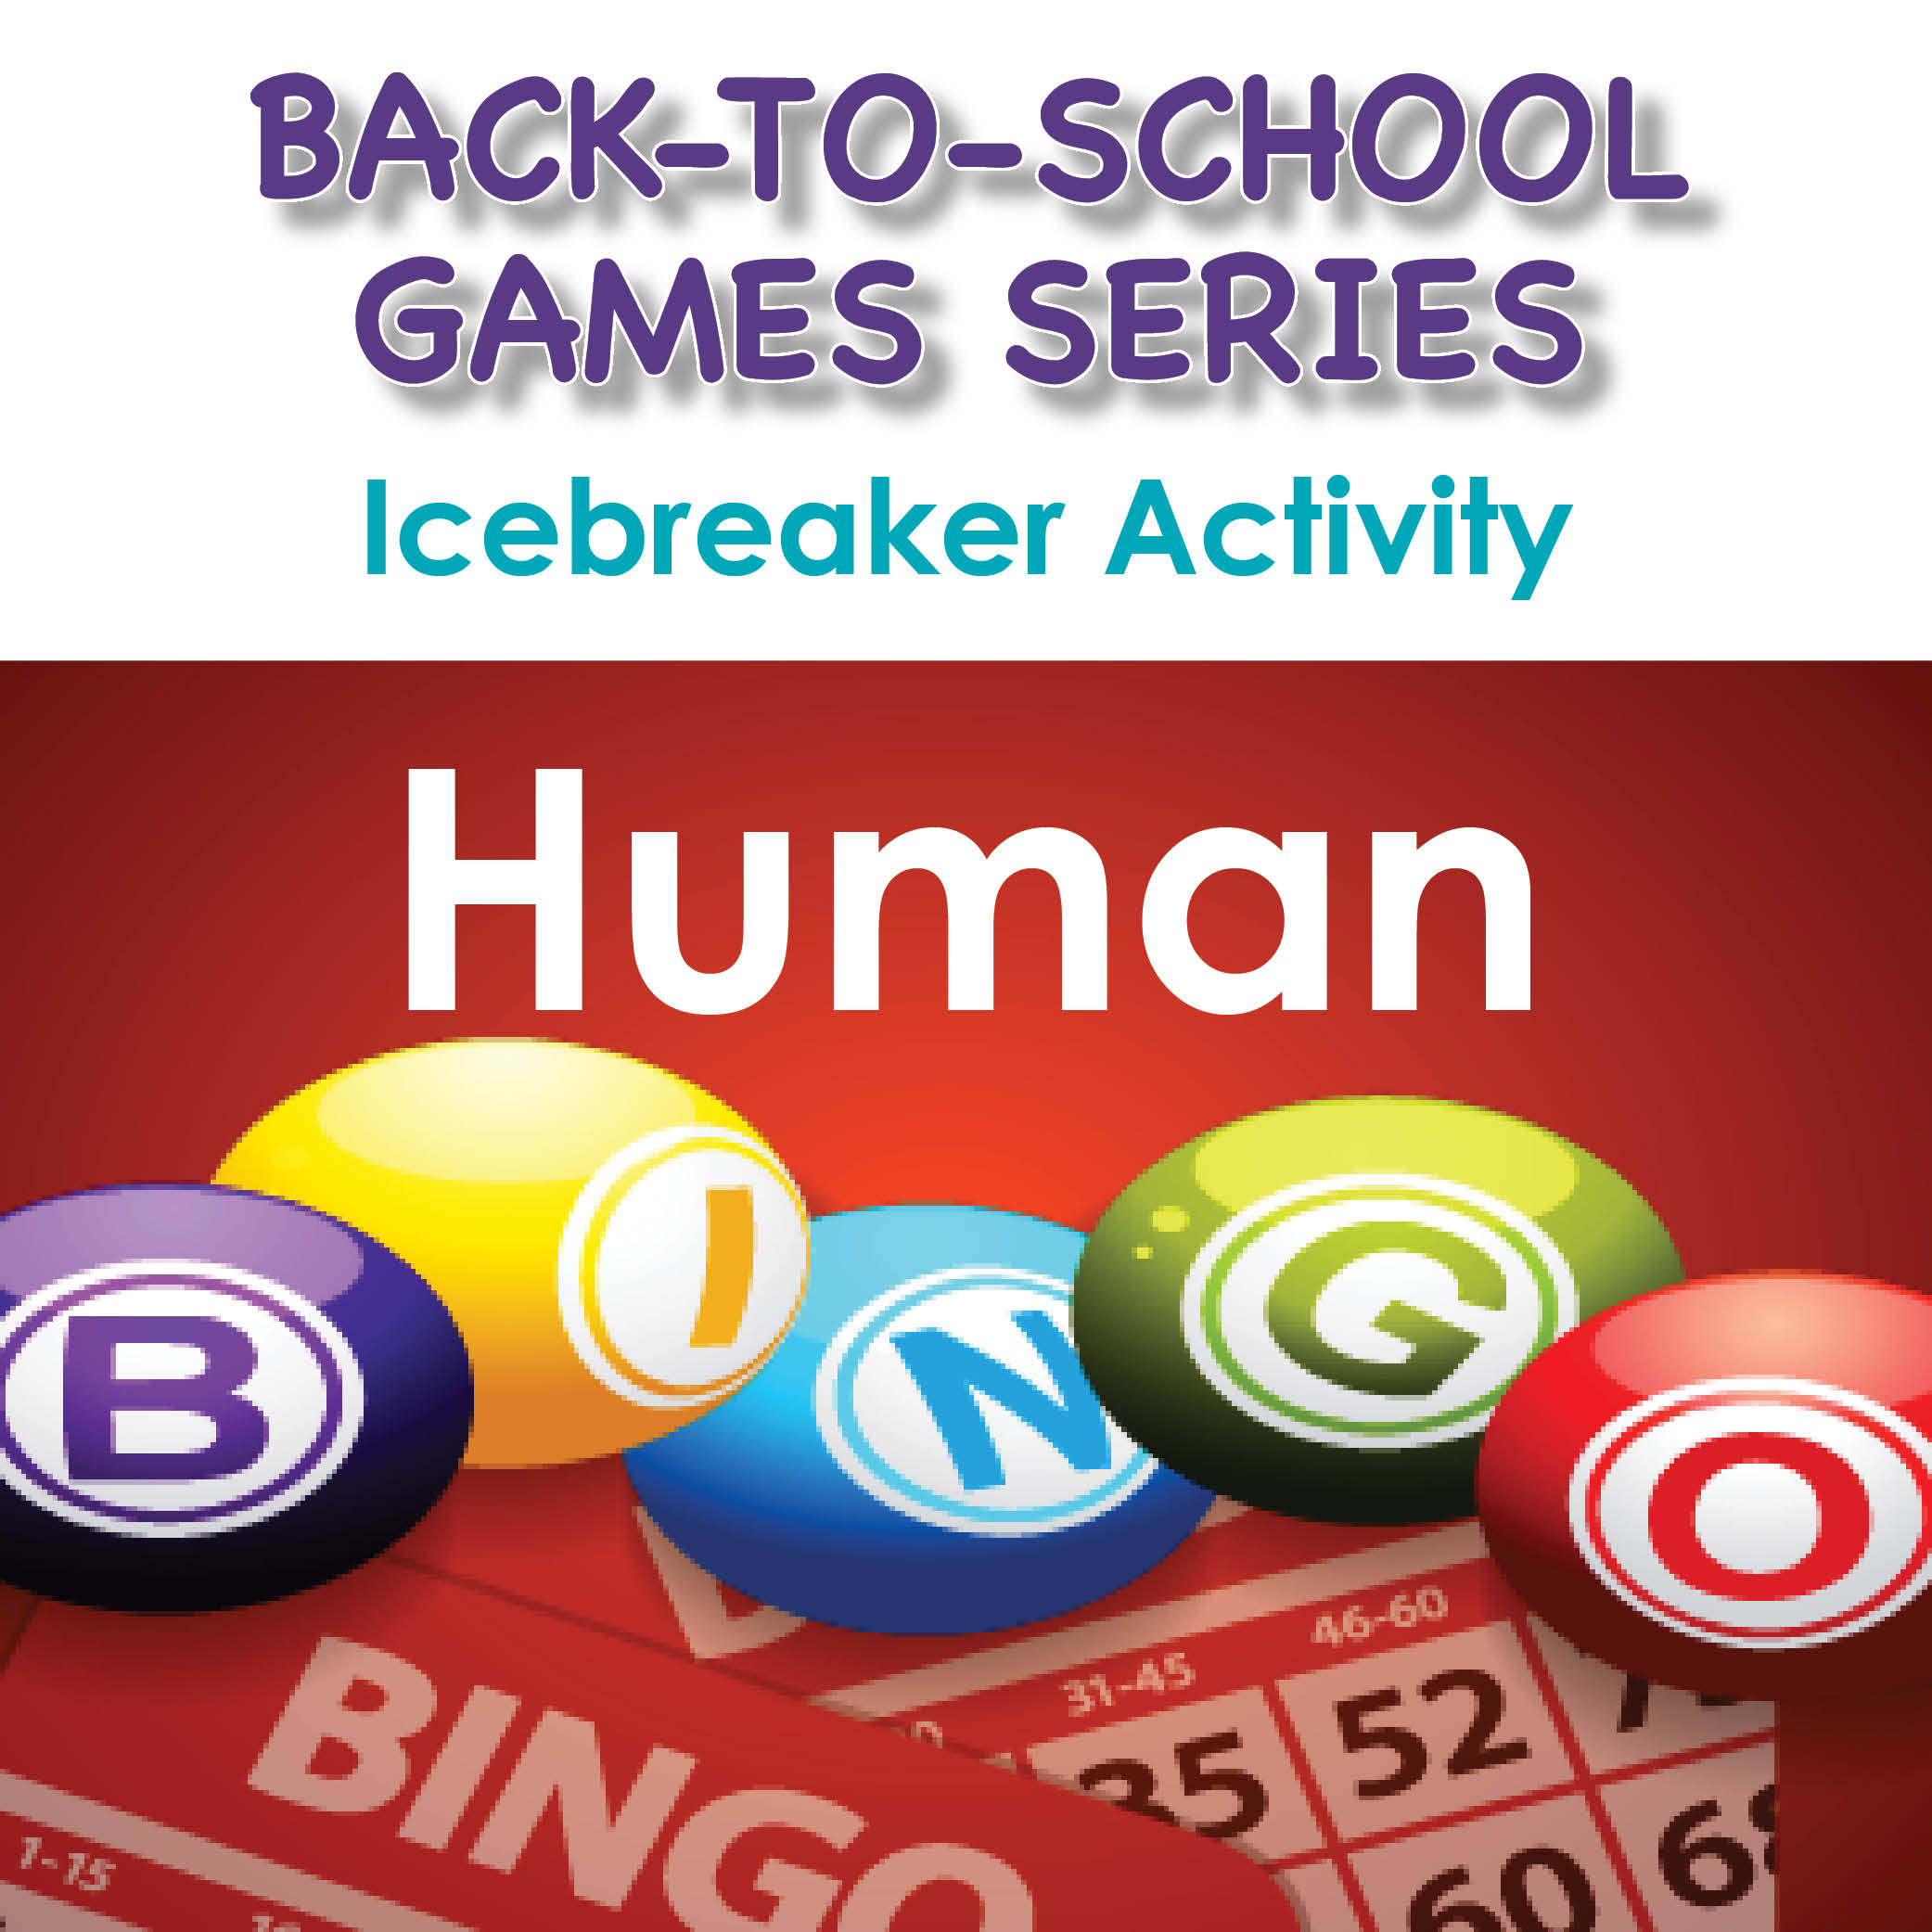 Back-To-School Games Series: Human Icebreaker Activity